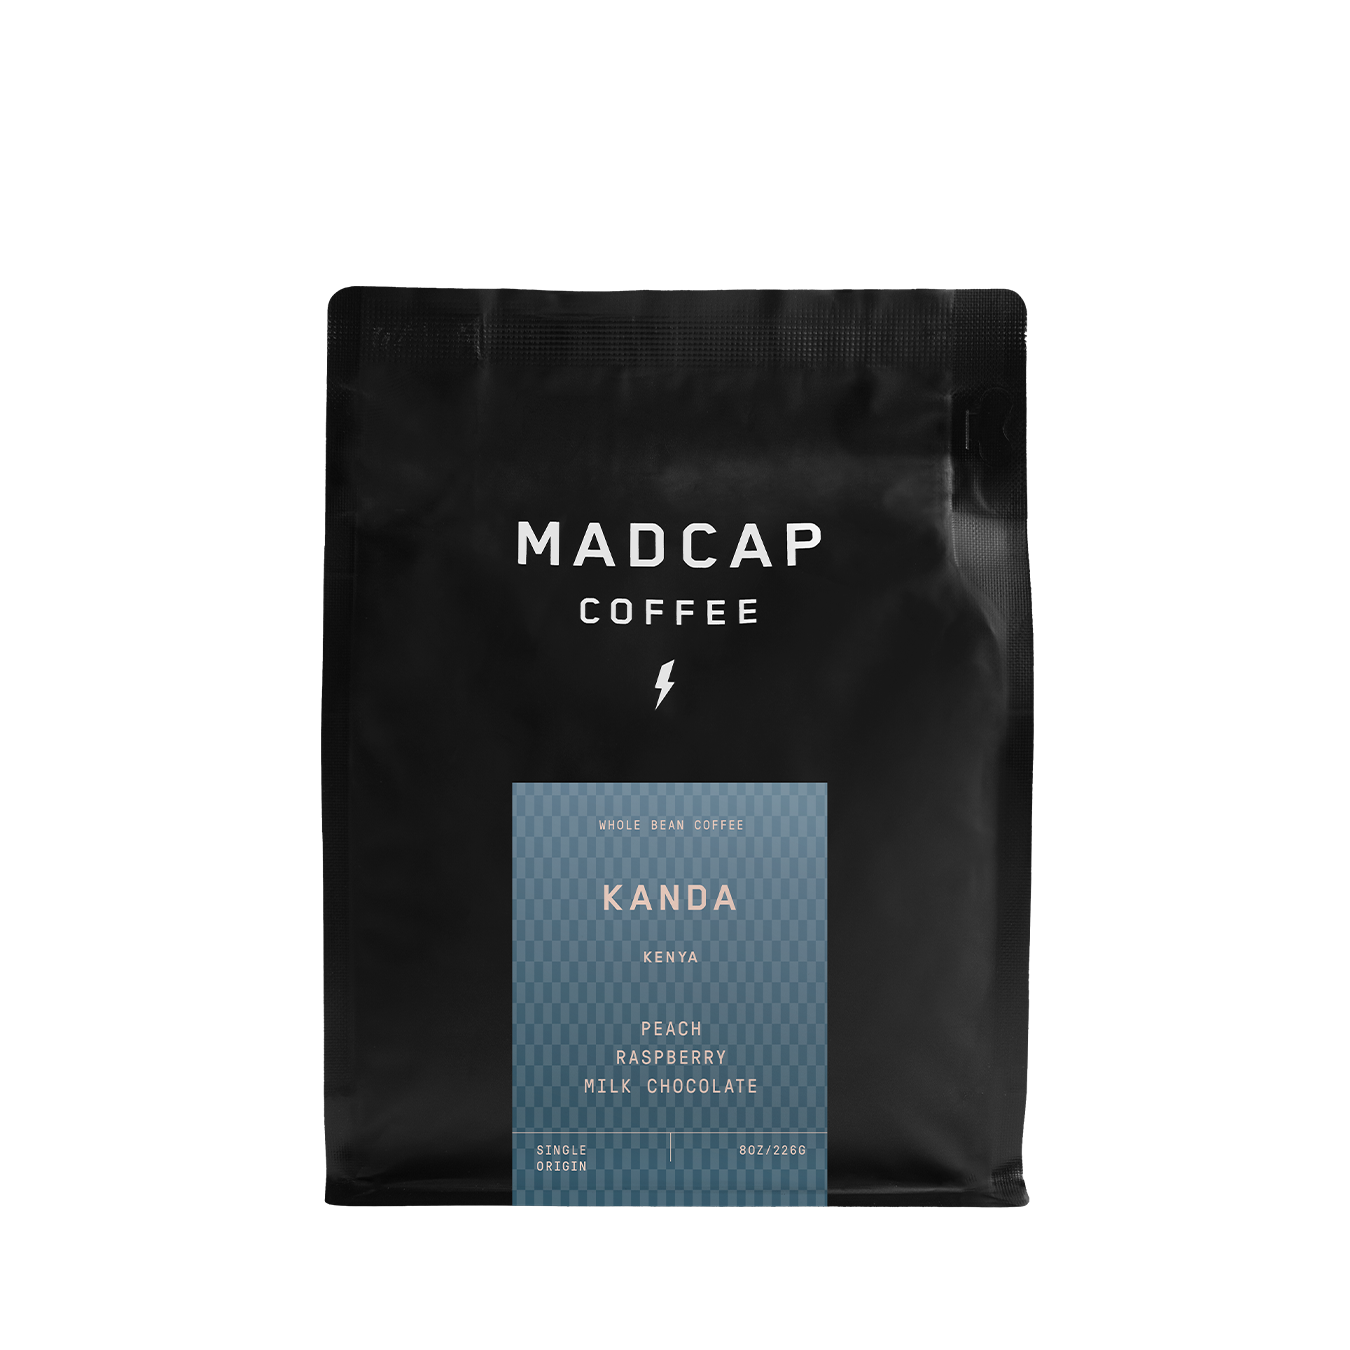 Single origin Kenya coffee Kanda